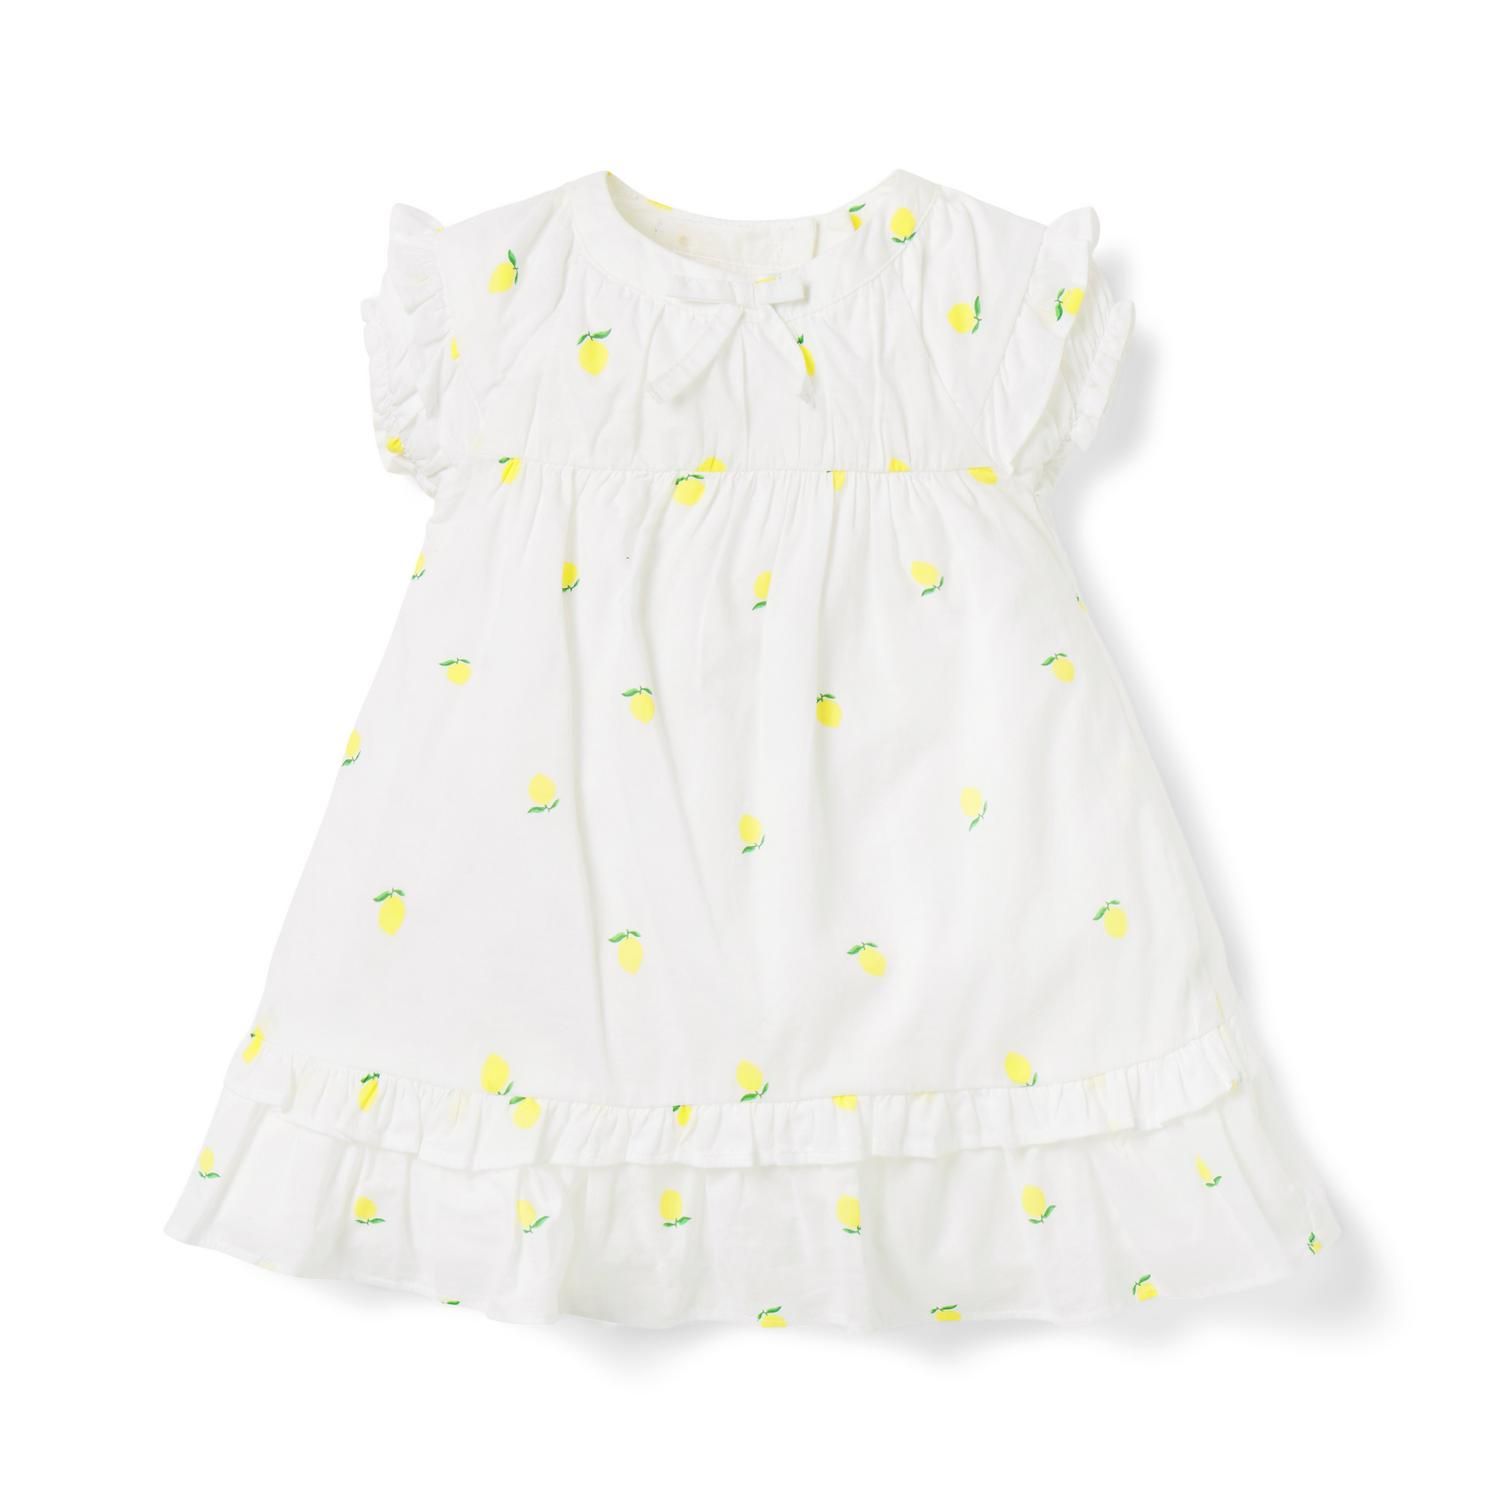 The Sunshine Lemon Baby Dress | Janie and Jack